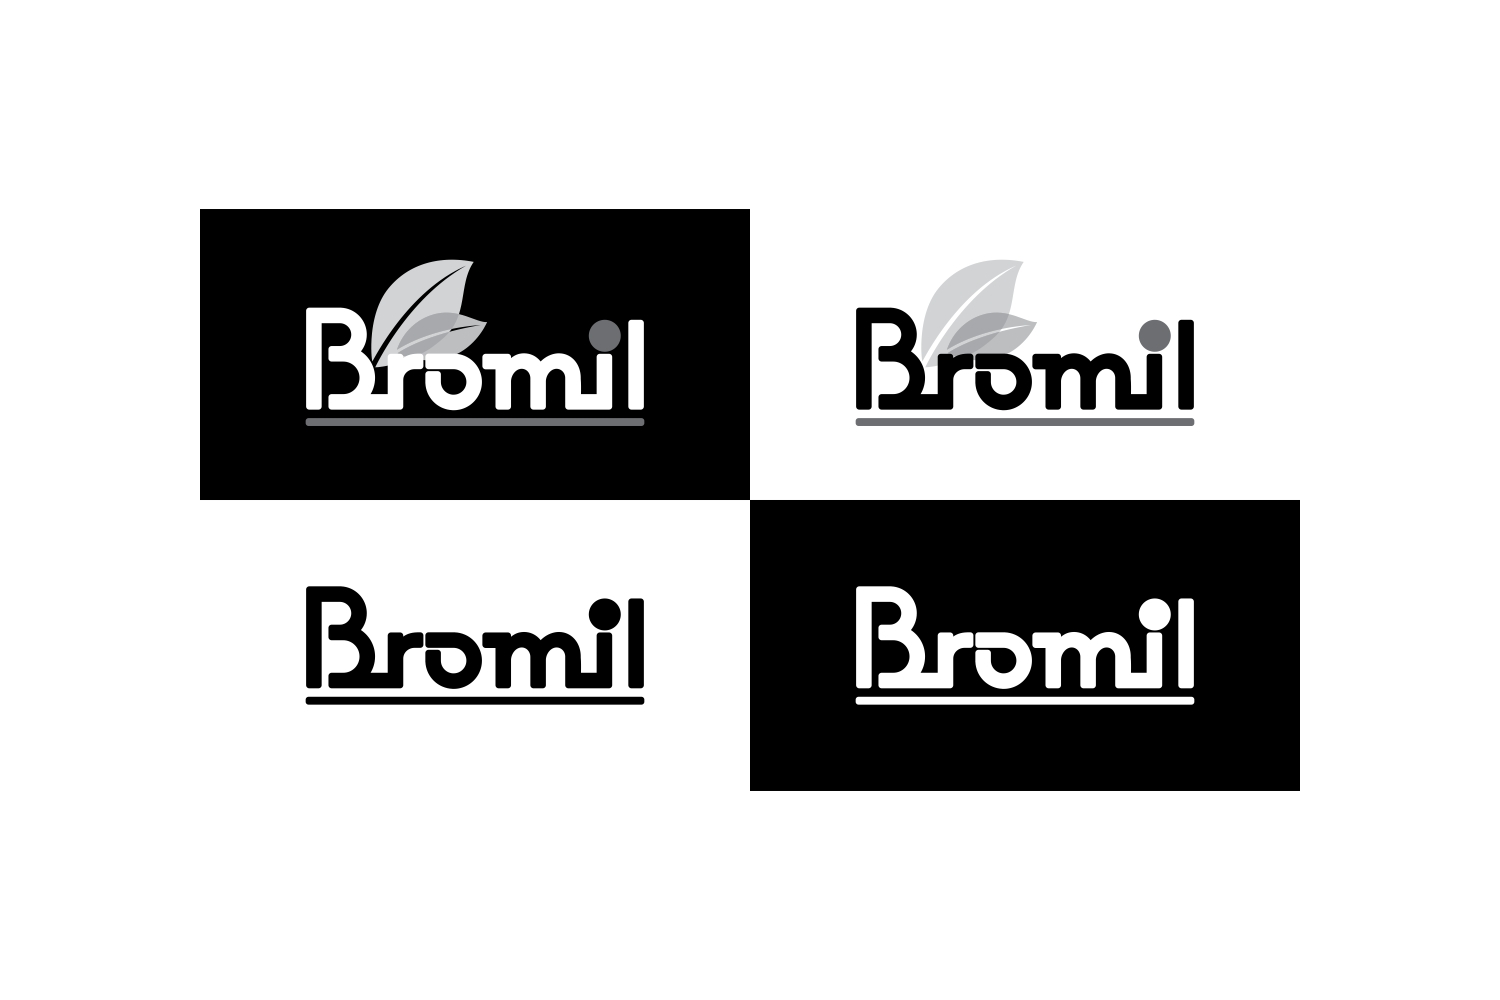 Bromil logo black & white & monochromatic options